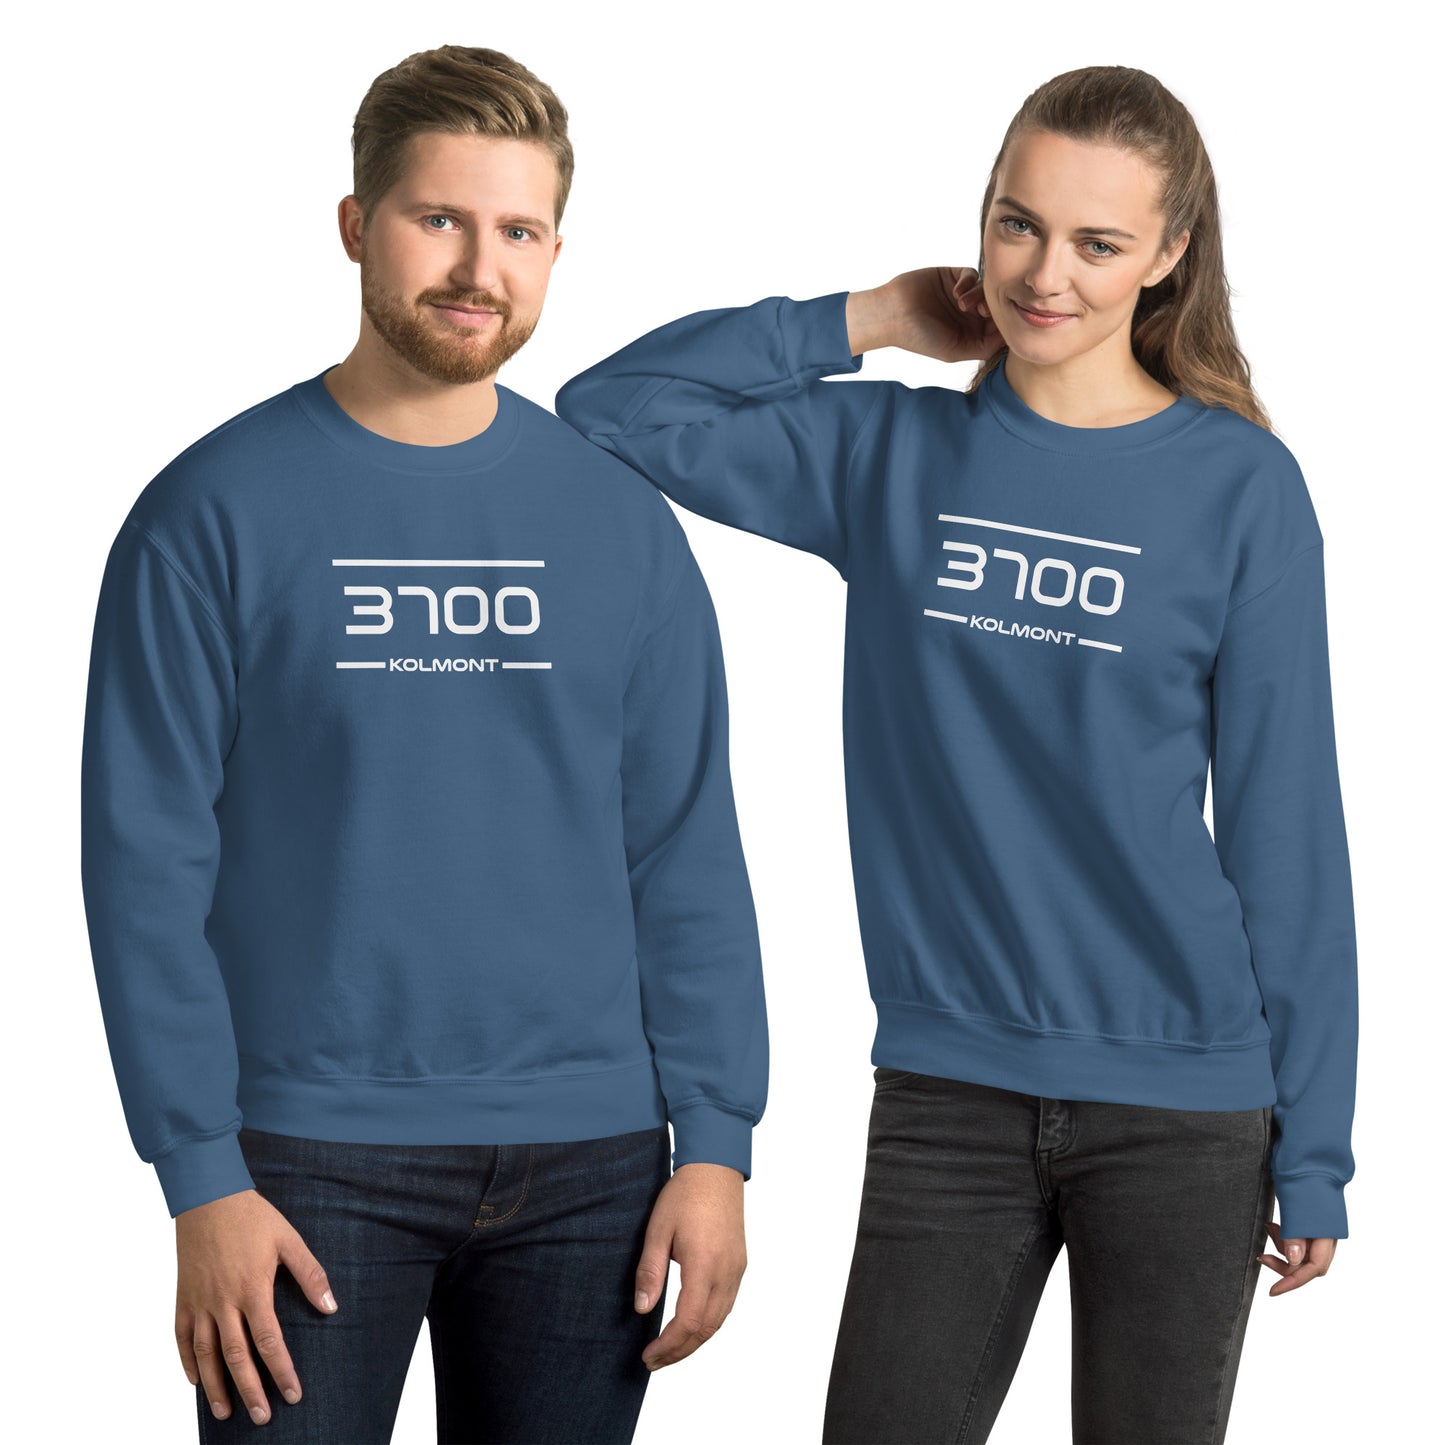 Sweater - 3700 - Kolmont (M/V)